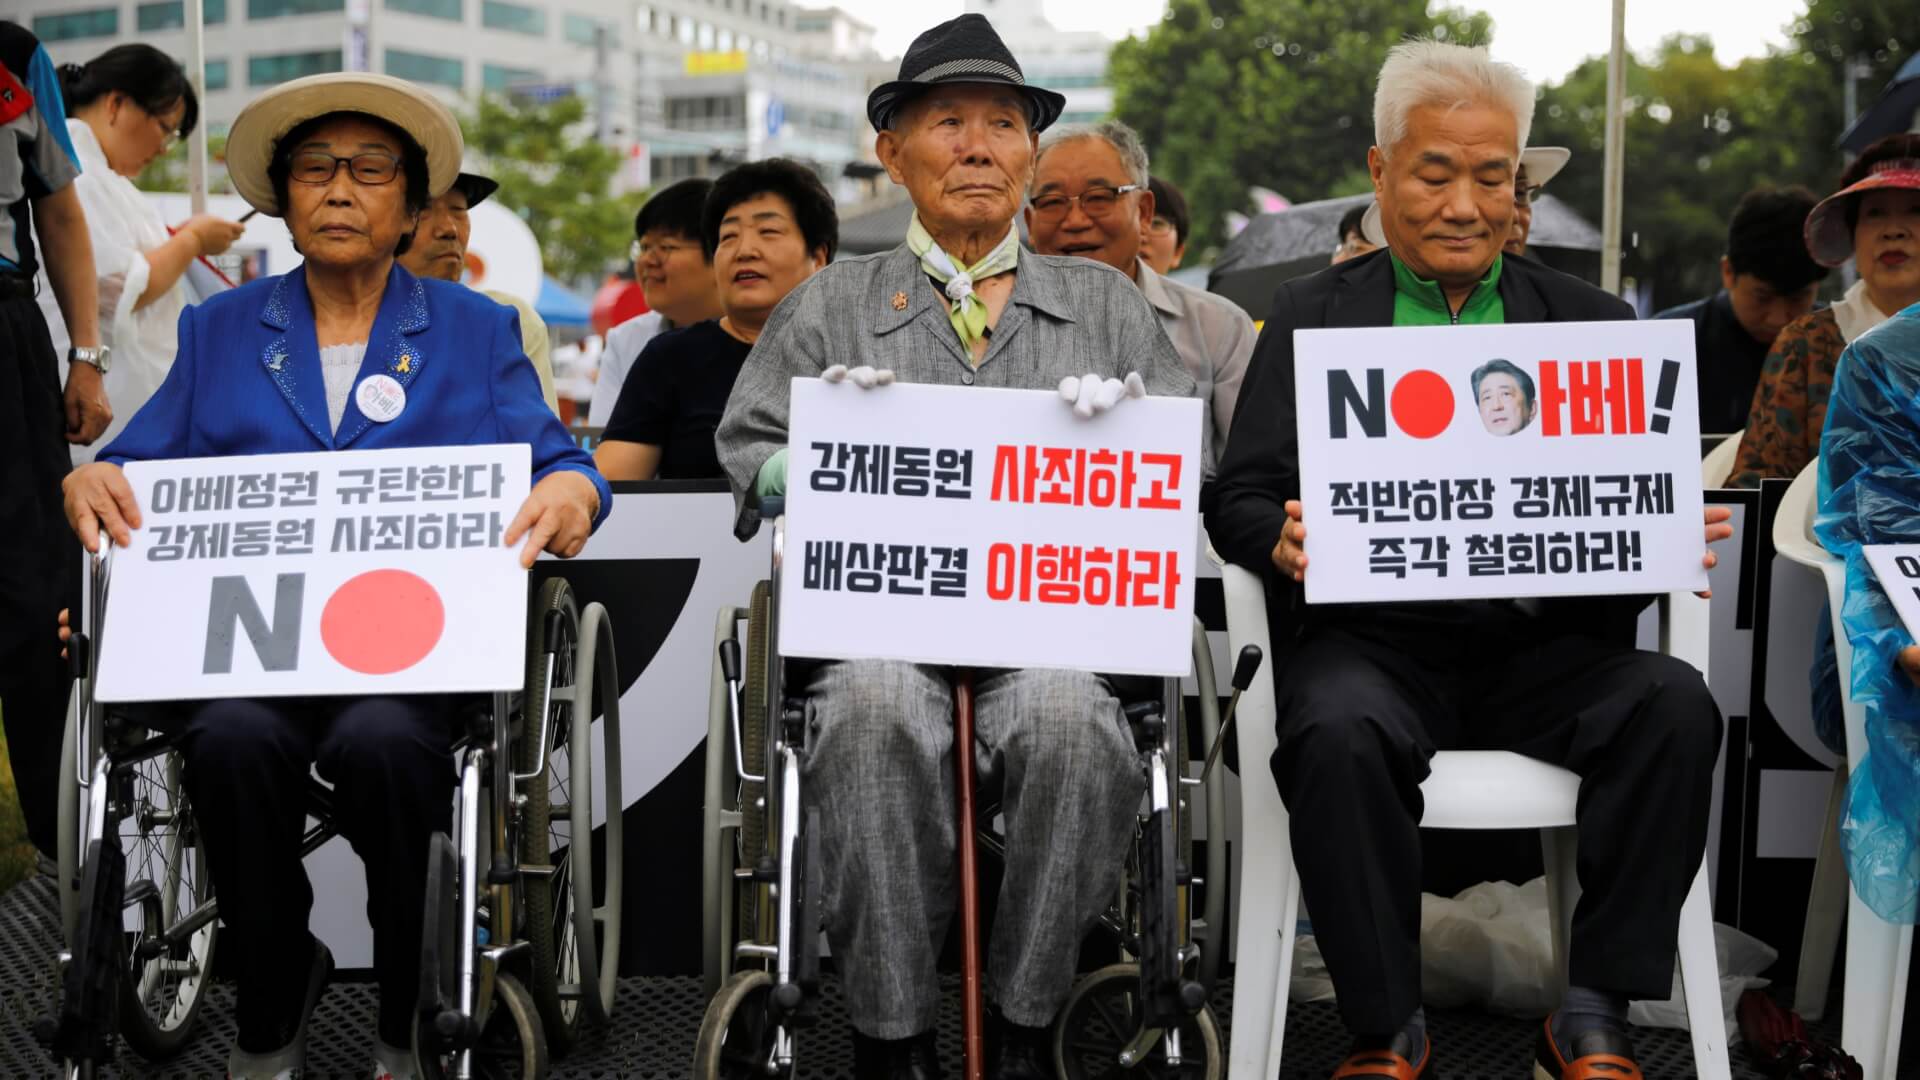 Statecraft Japan South Korea Feud Reignites Over World War Ii Compensation 